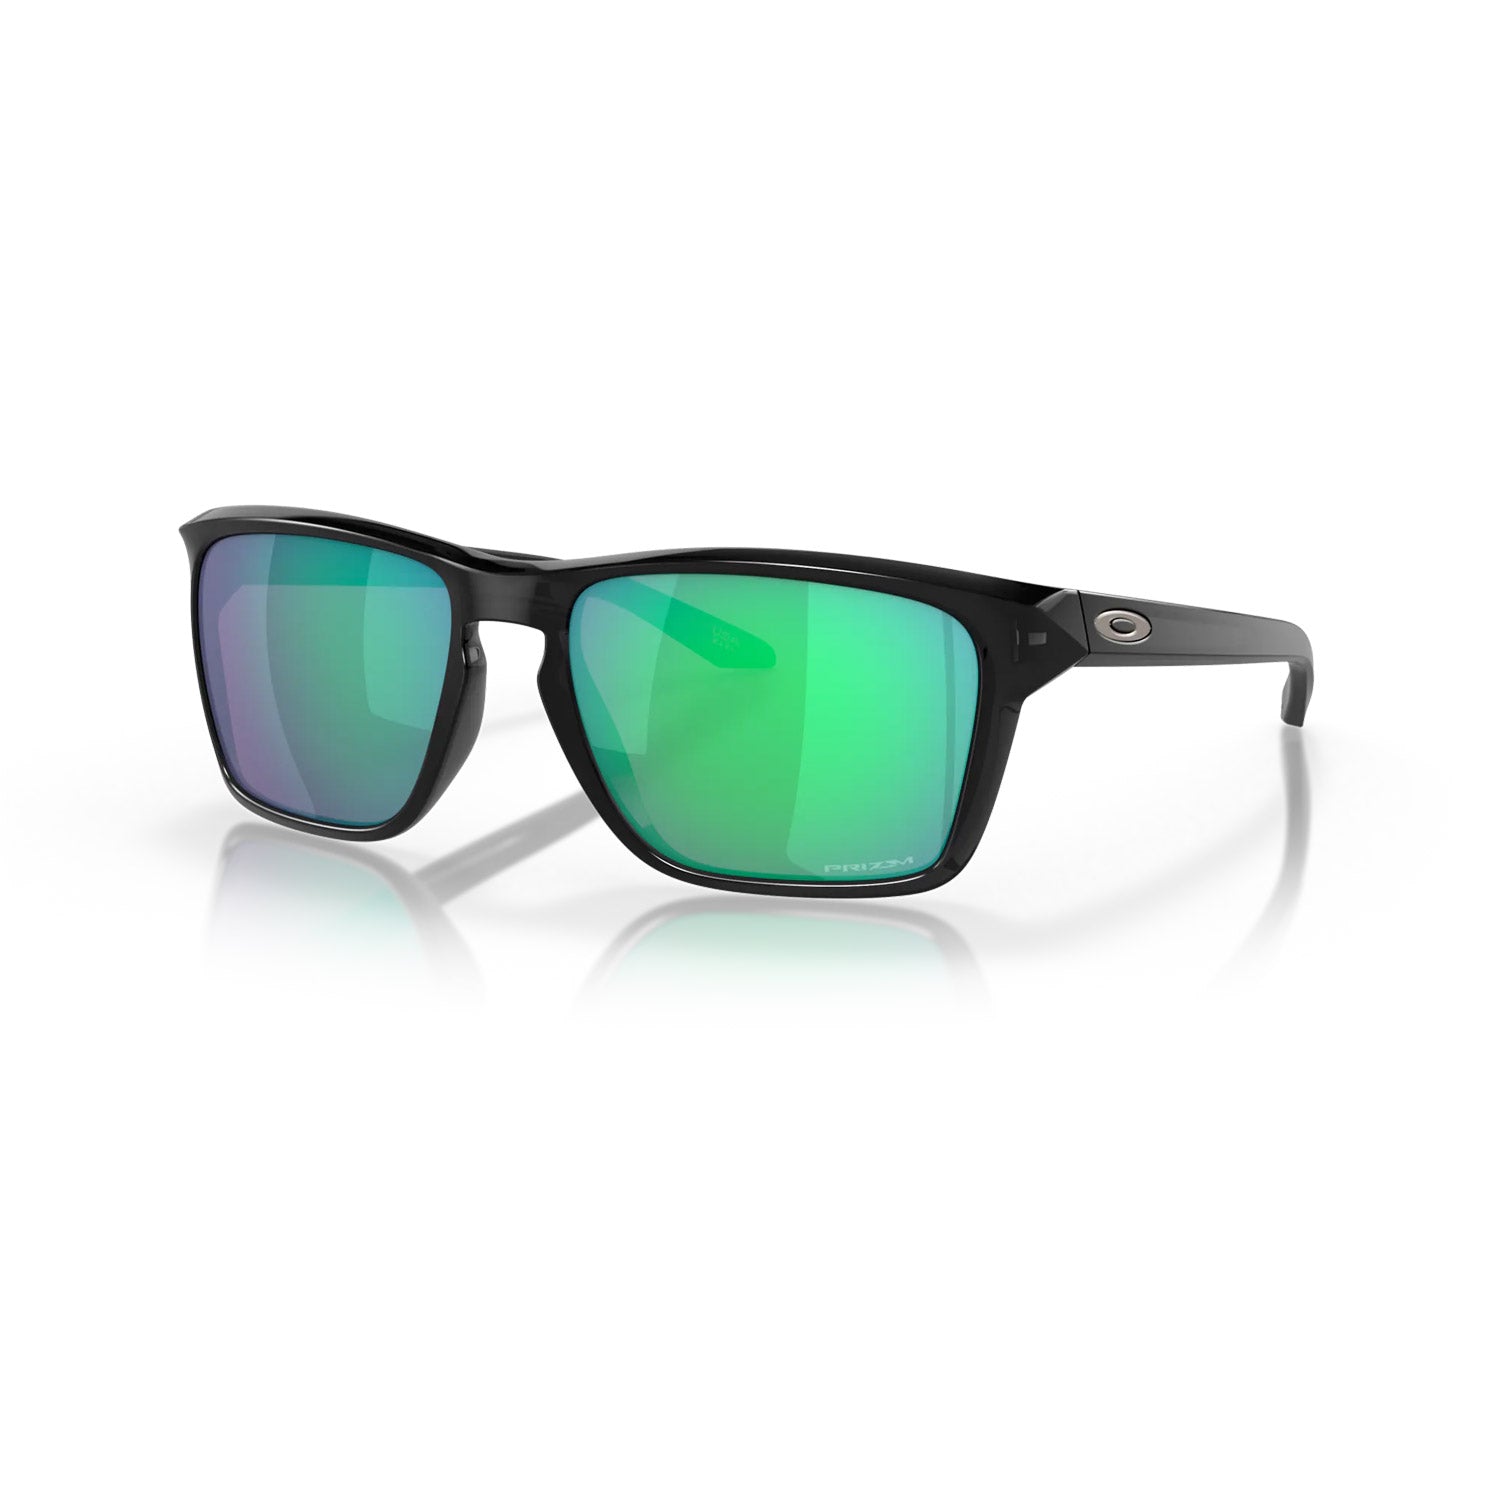 Sylas Sunglasses Black Ink - Prizm Jade Iridium Lens